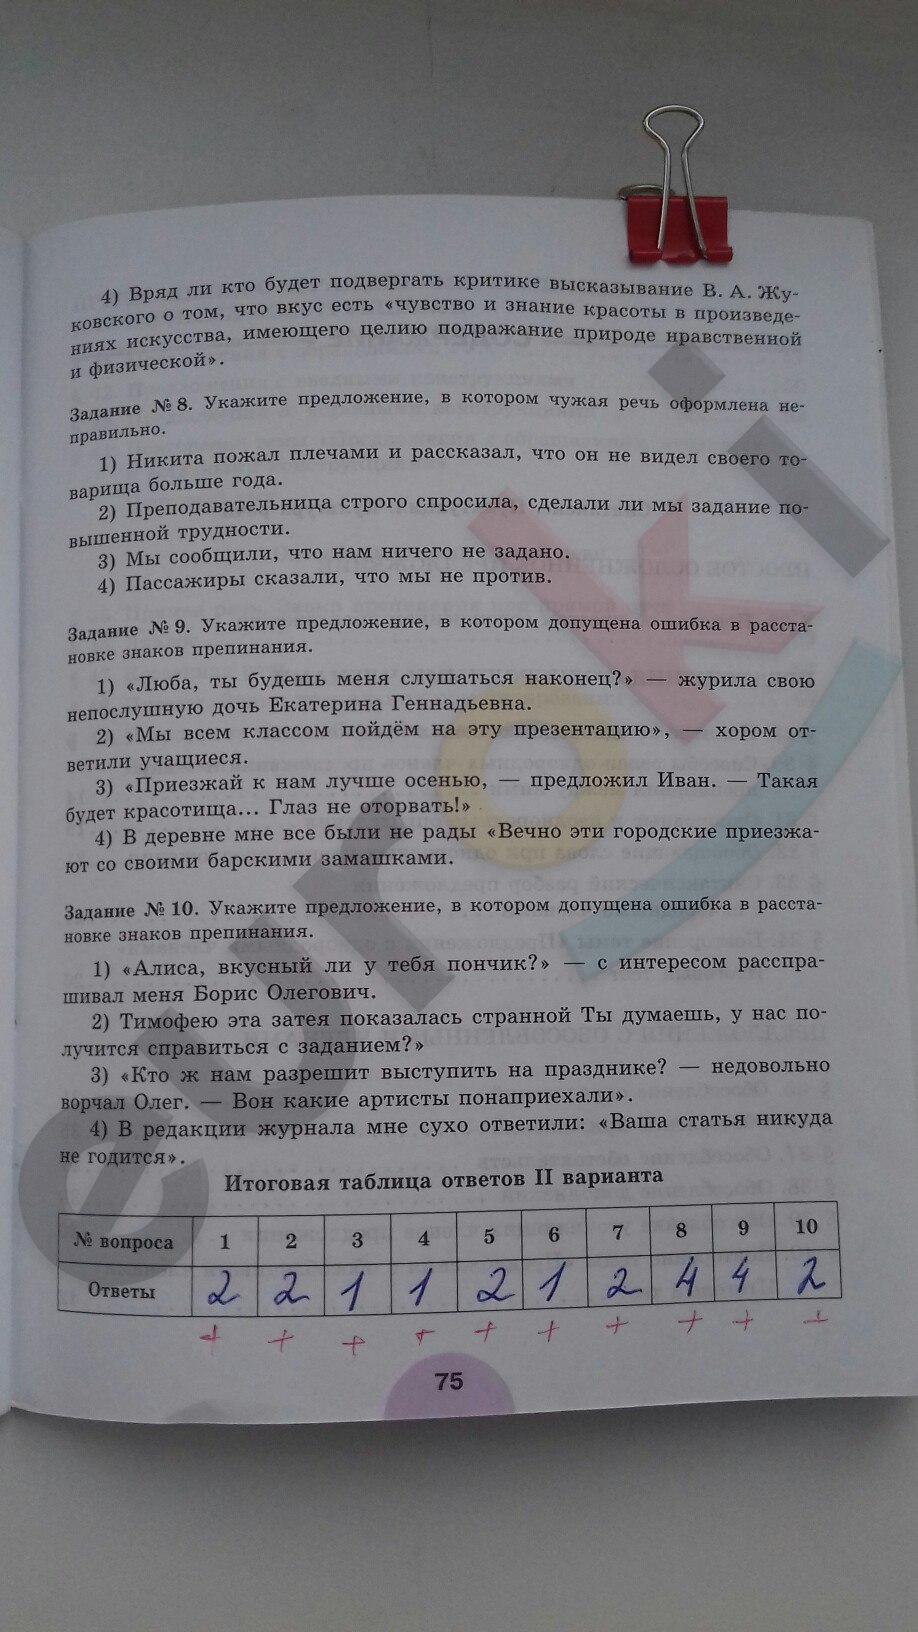 гдз 8 класс рабочая тетрадь часть 2 страница 75 русский язык Рыбченкова, Александрова